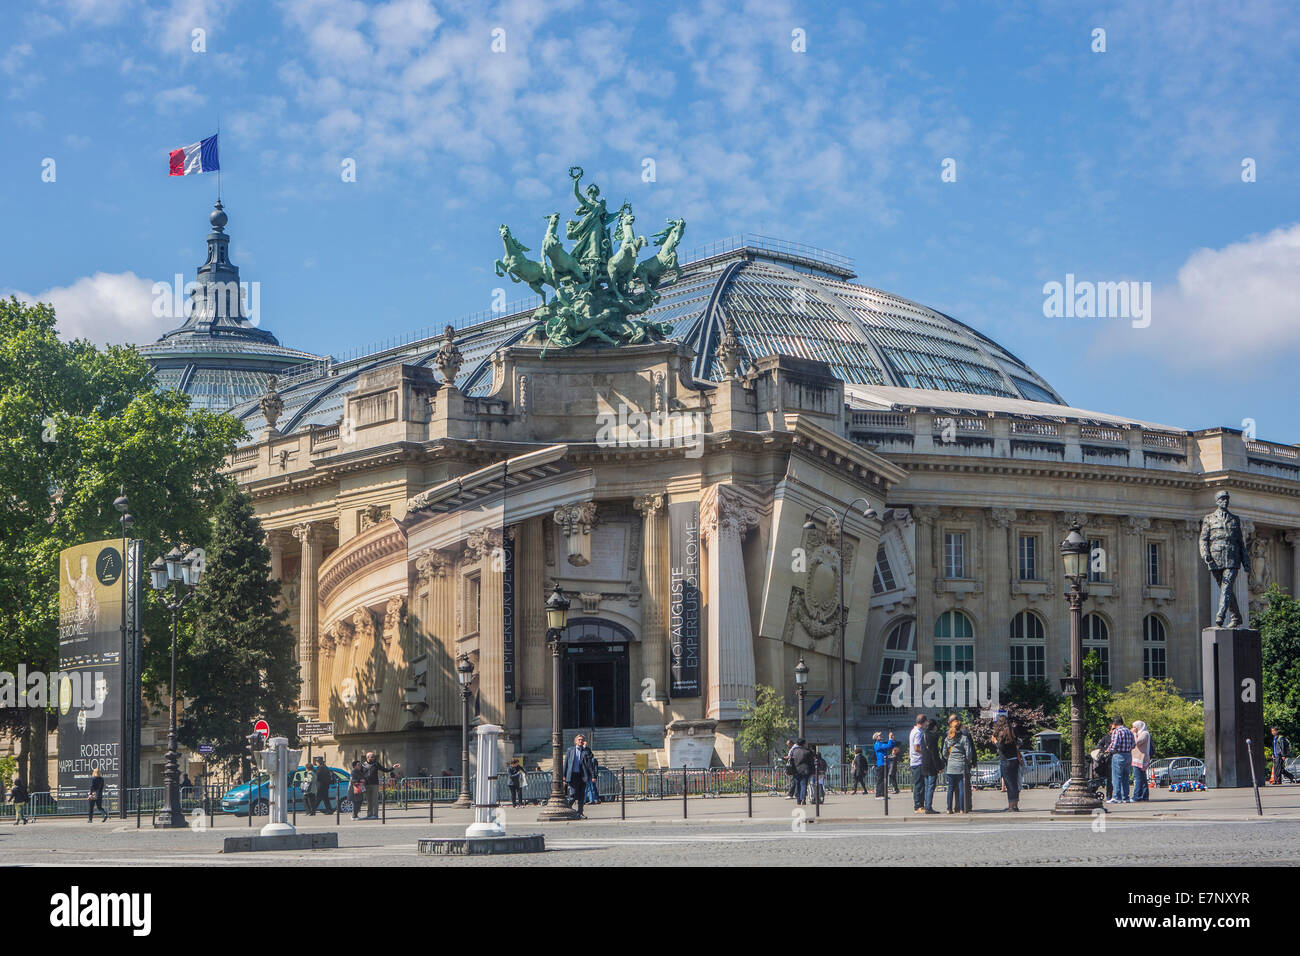 City, Entrance, France, Grand Palais, Paris, architecture, art, artistic, exposition, eye catching, tourism, travel, weird Stock Photo